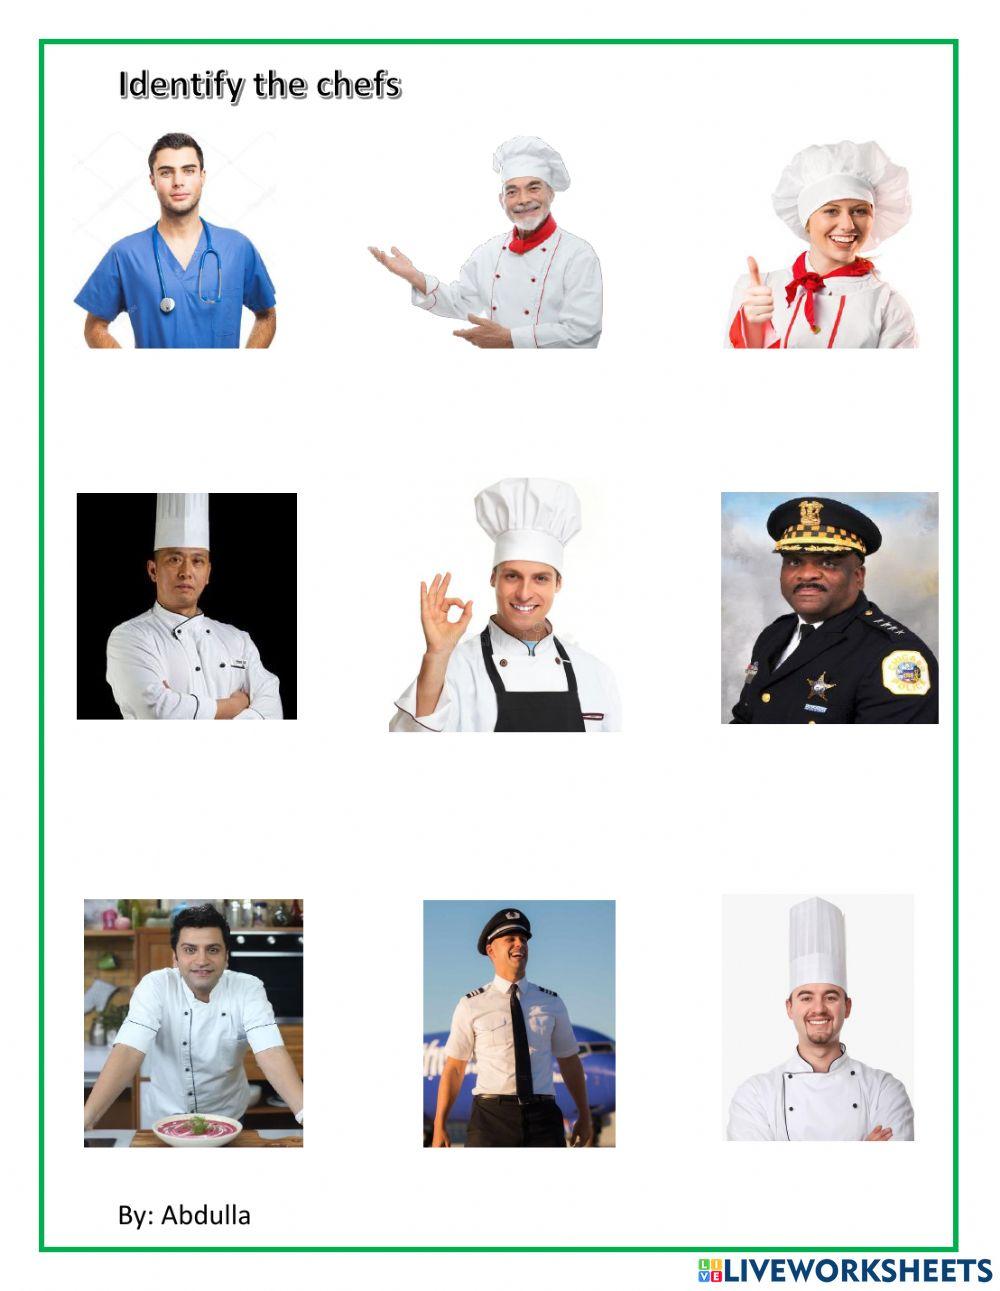 Identify the chefs